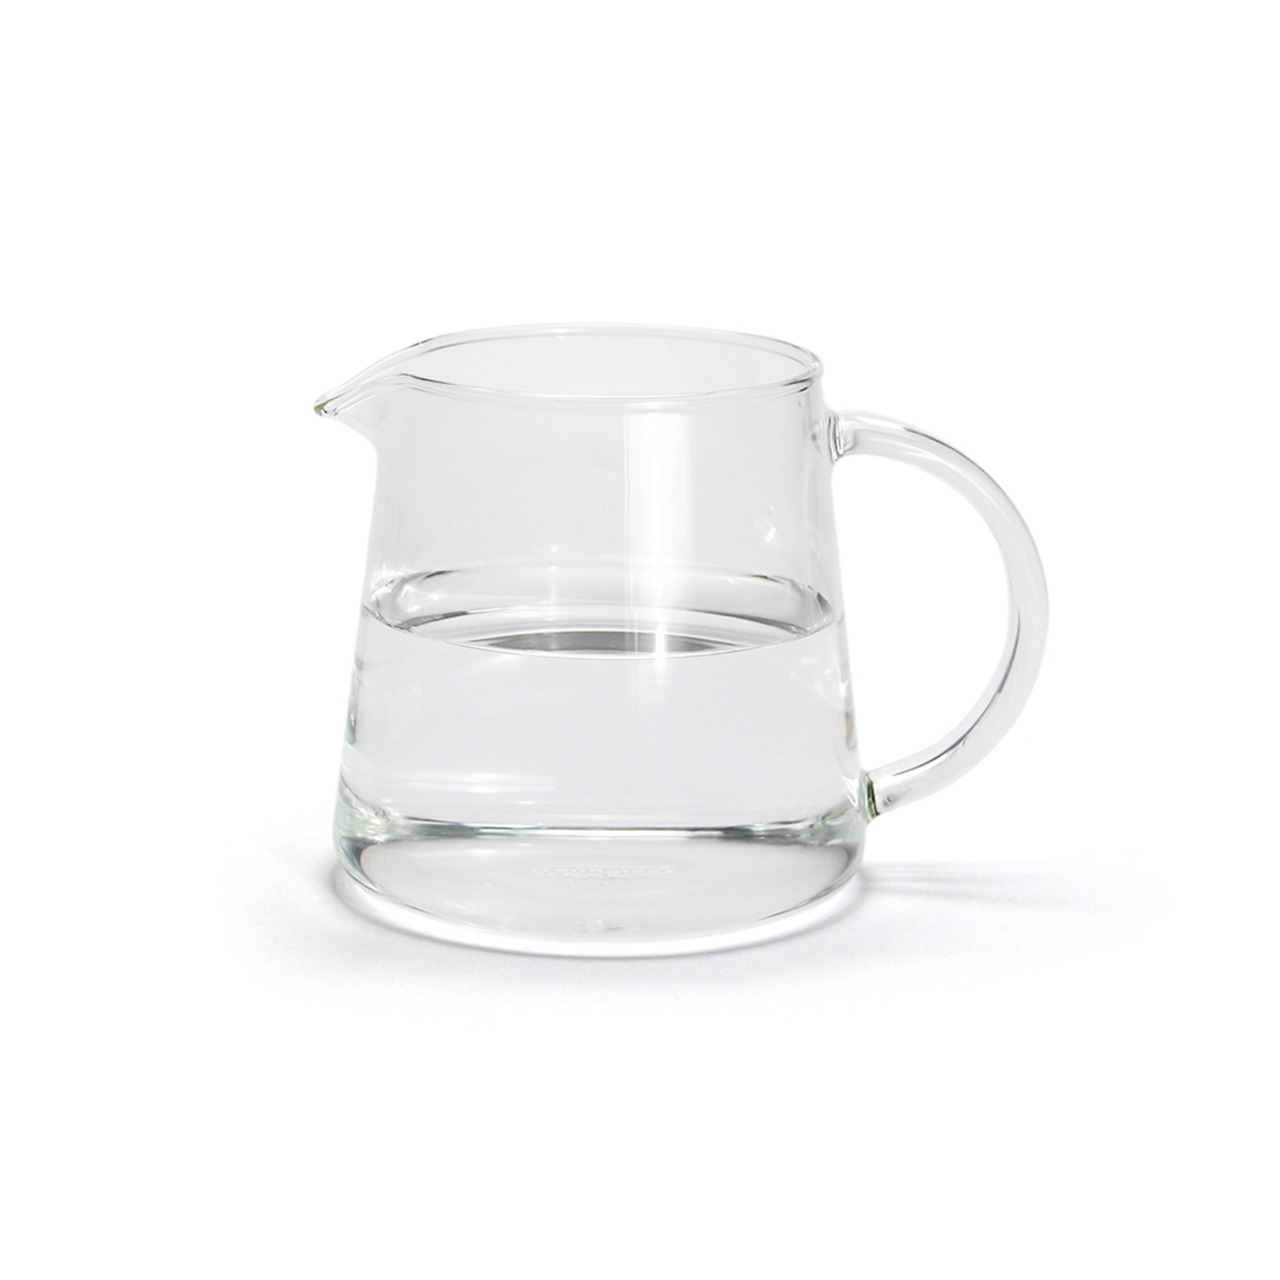 Trendglas-Jena Glass Coffee Server/イエナガラス/ピッチャー/コーヒーサーバー/キッチン/雑貨(ガス直火、電子レンジ対応)